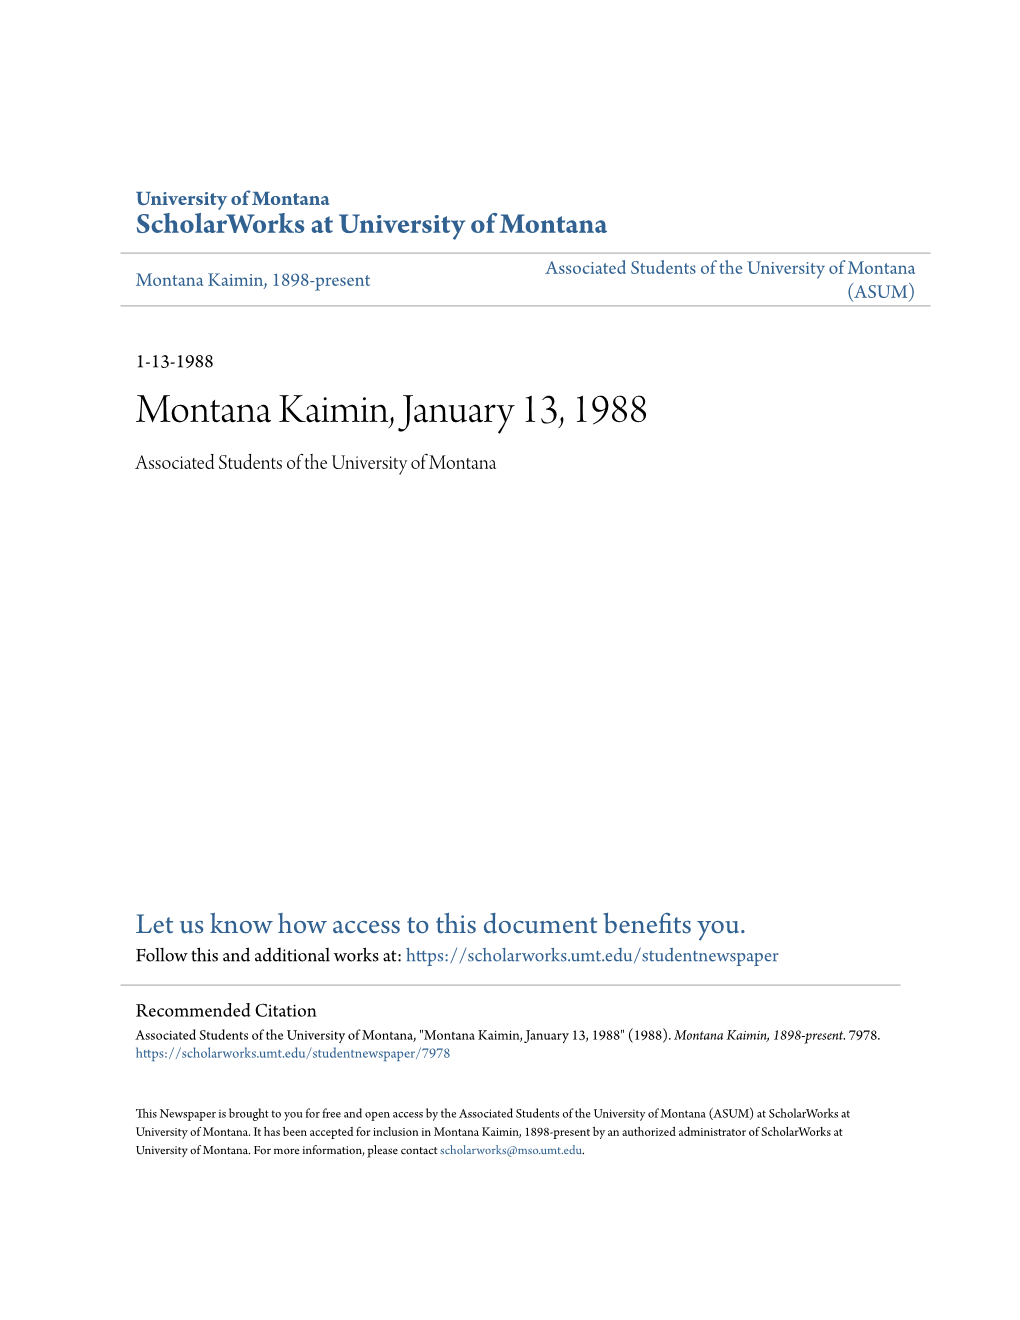 Montana Kaimin, January 13, 1988 Associated Students of the University of Montana